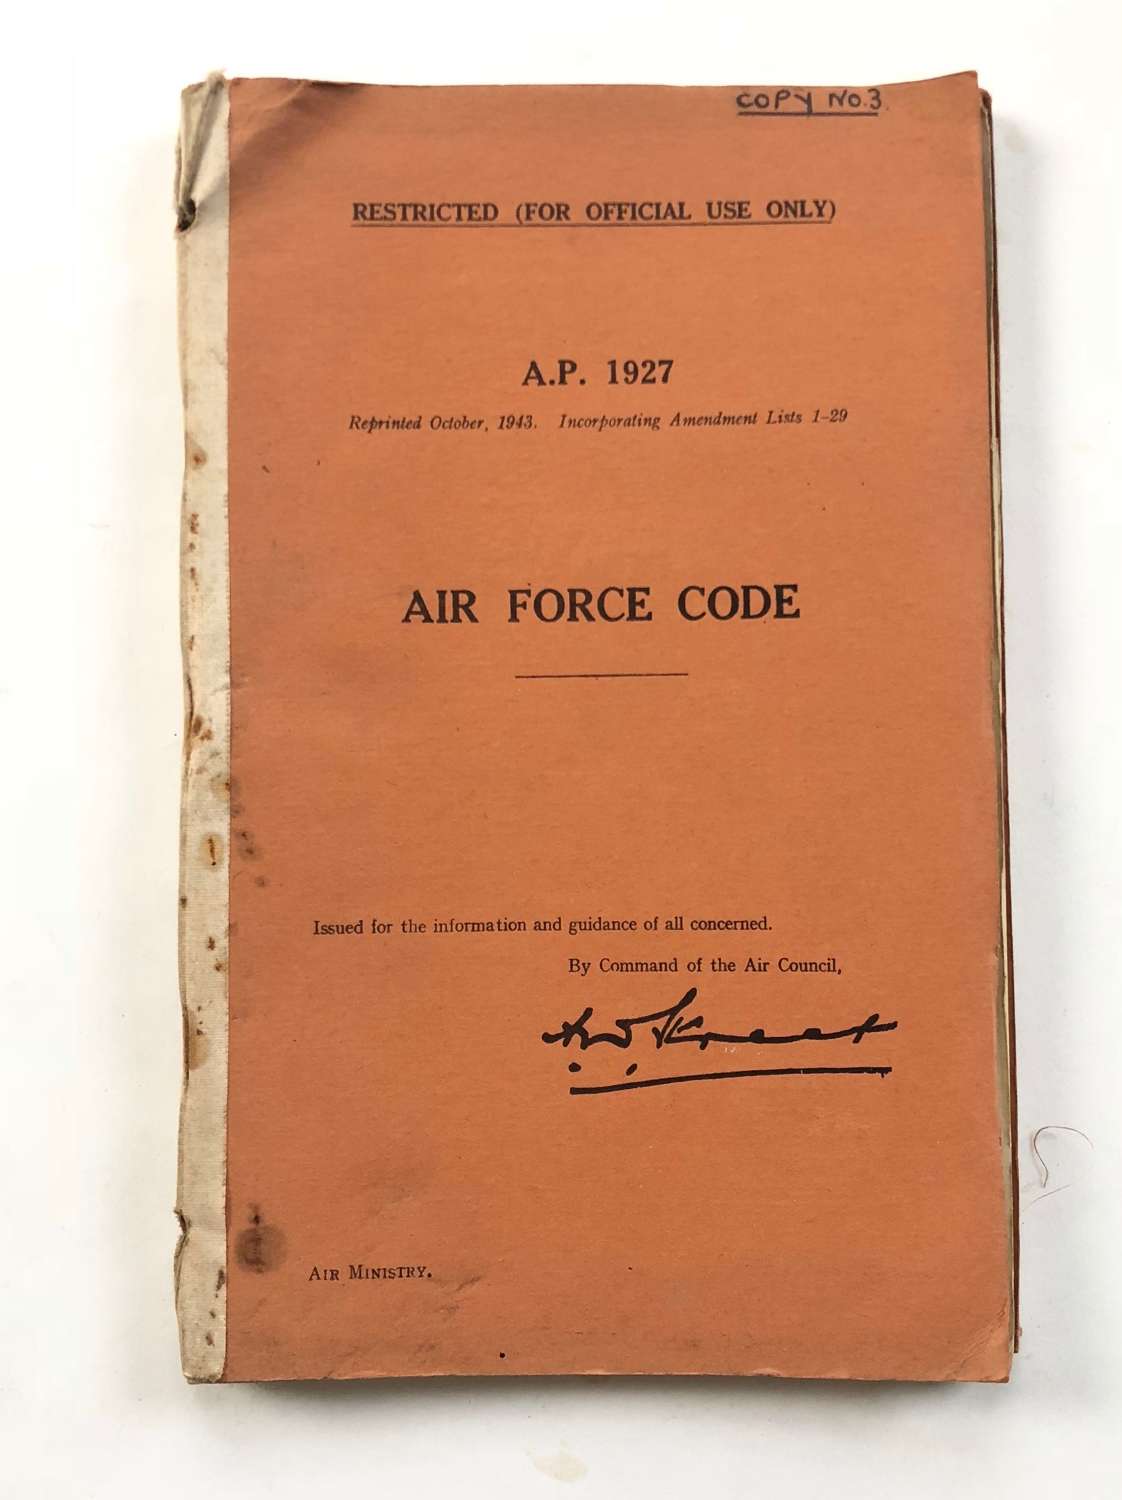 WW2 / Cold War RAF AP 1927 Air Force Code For Transmitting.